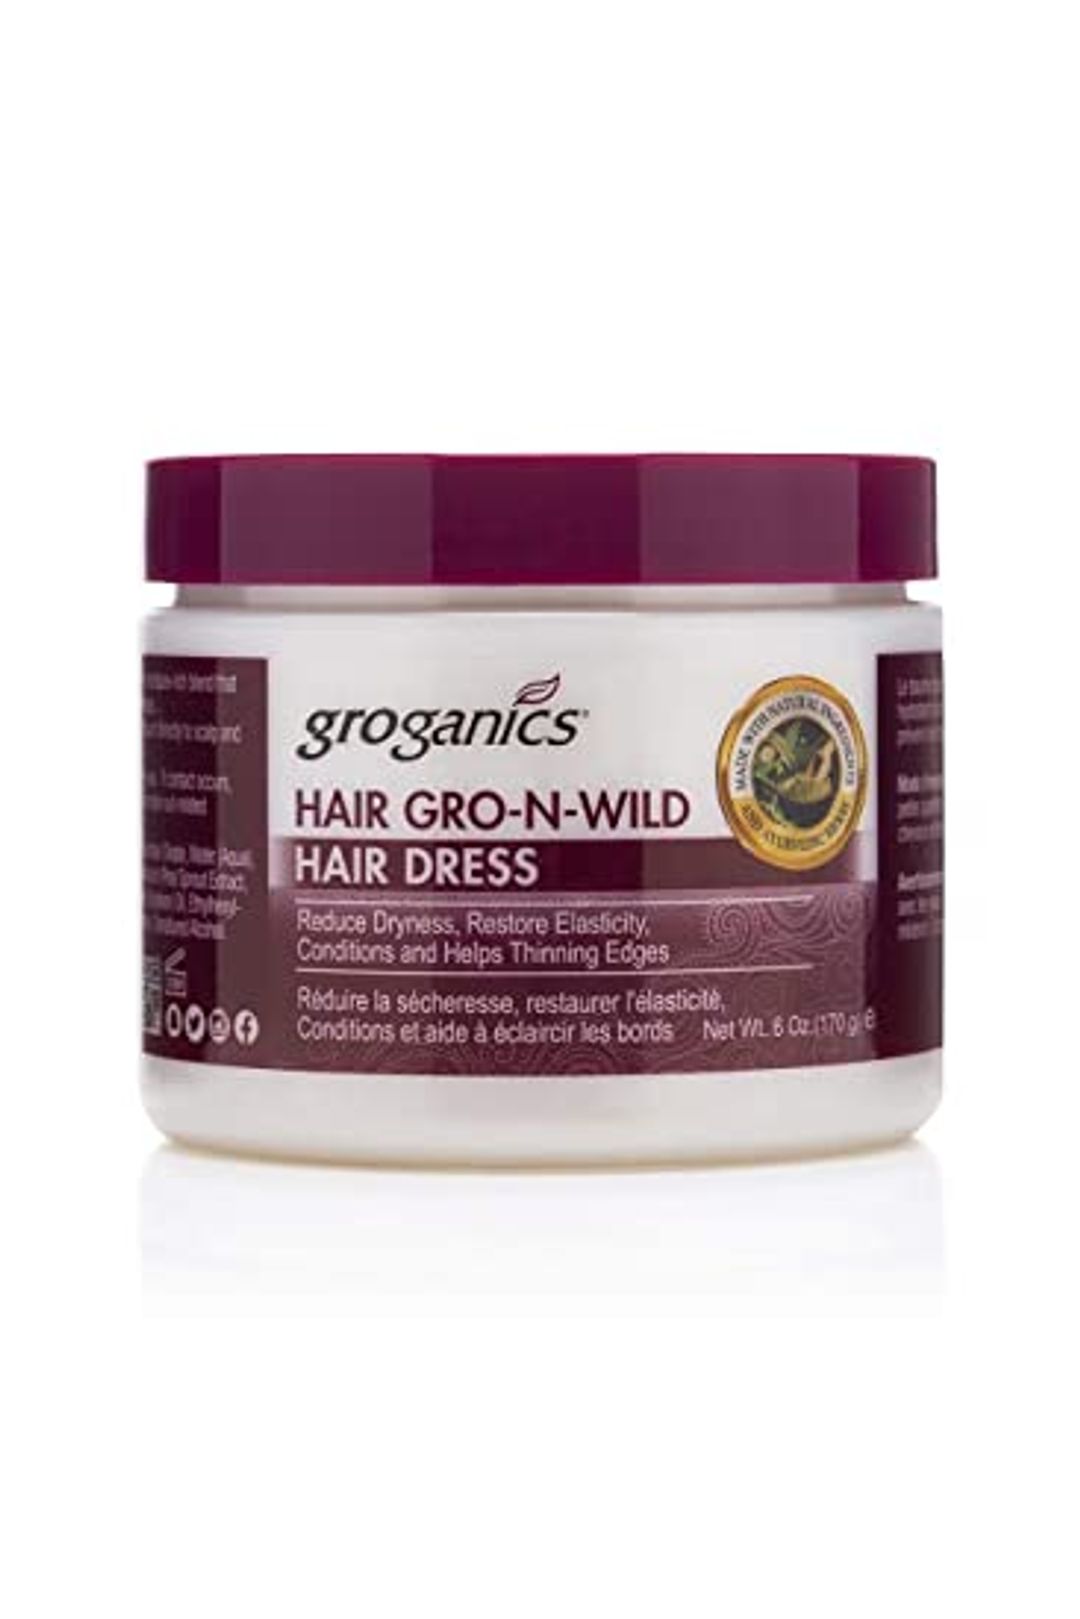 Groganics Hair Gro-n-wild Hair Dress - 6oz